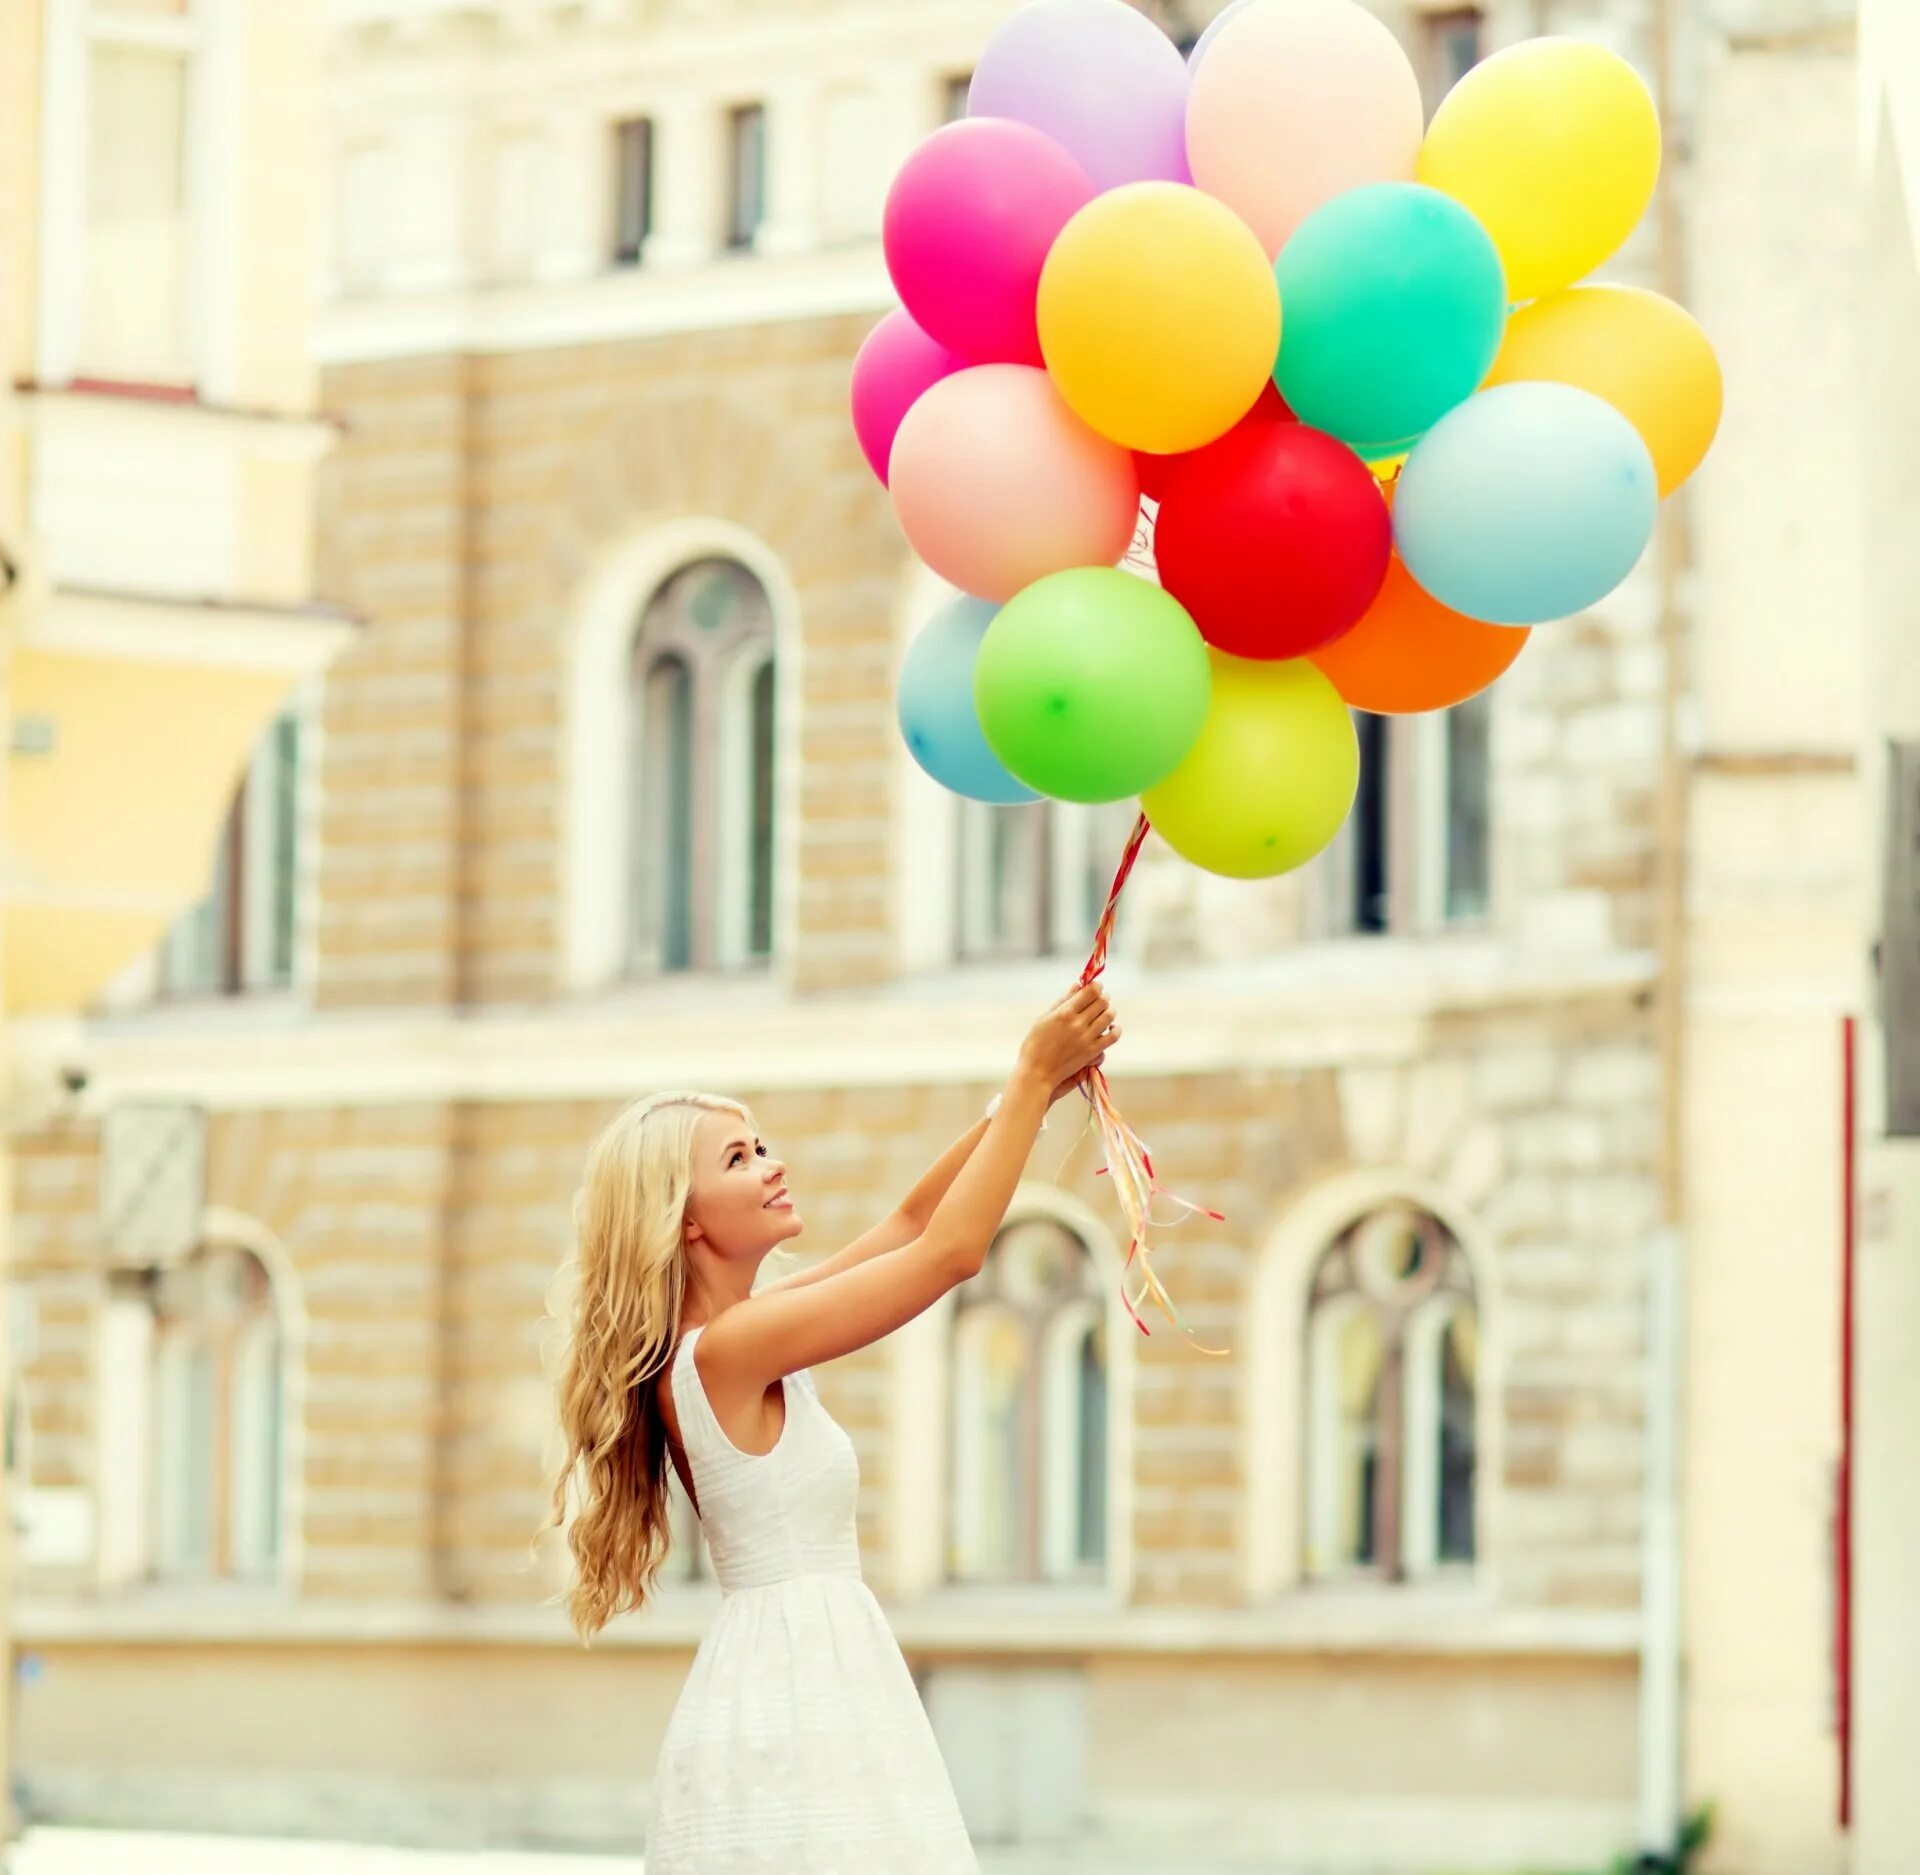 Девушки с шарами видео. Девушка с шариками. Девушка с воздушными шарами. Фотосессия с воздушными шарами. Фотосессия с воздушными шариками.